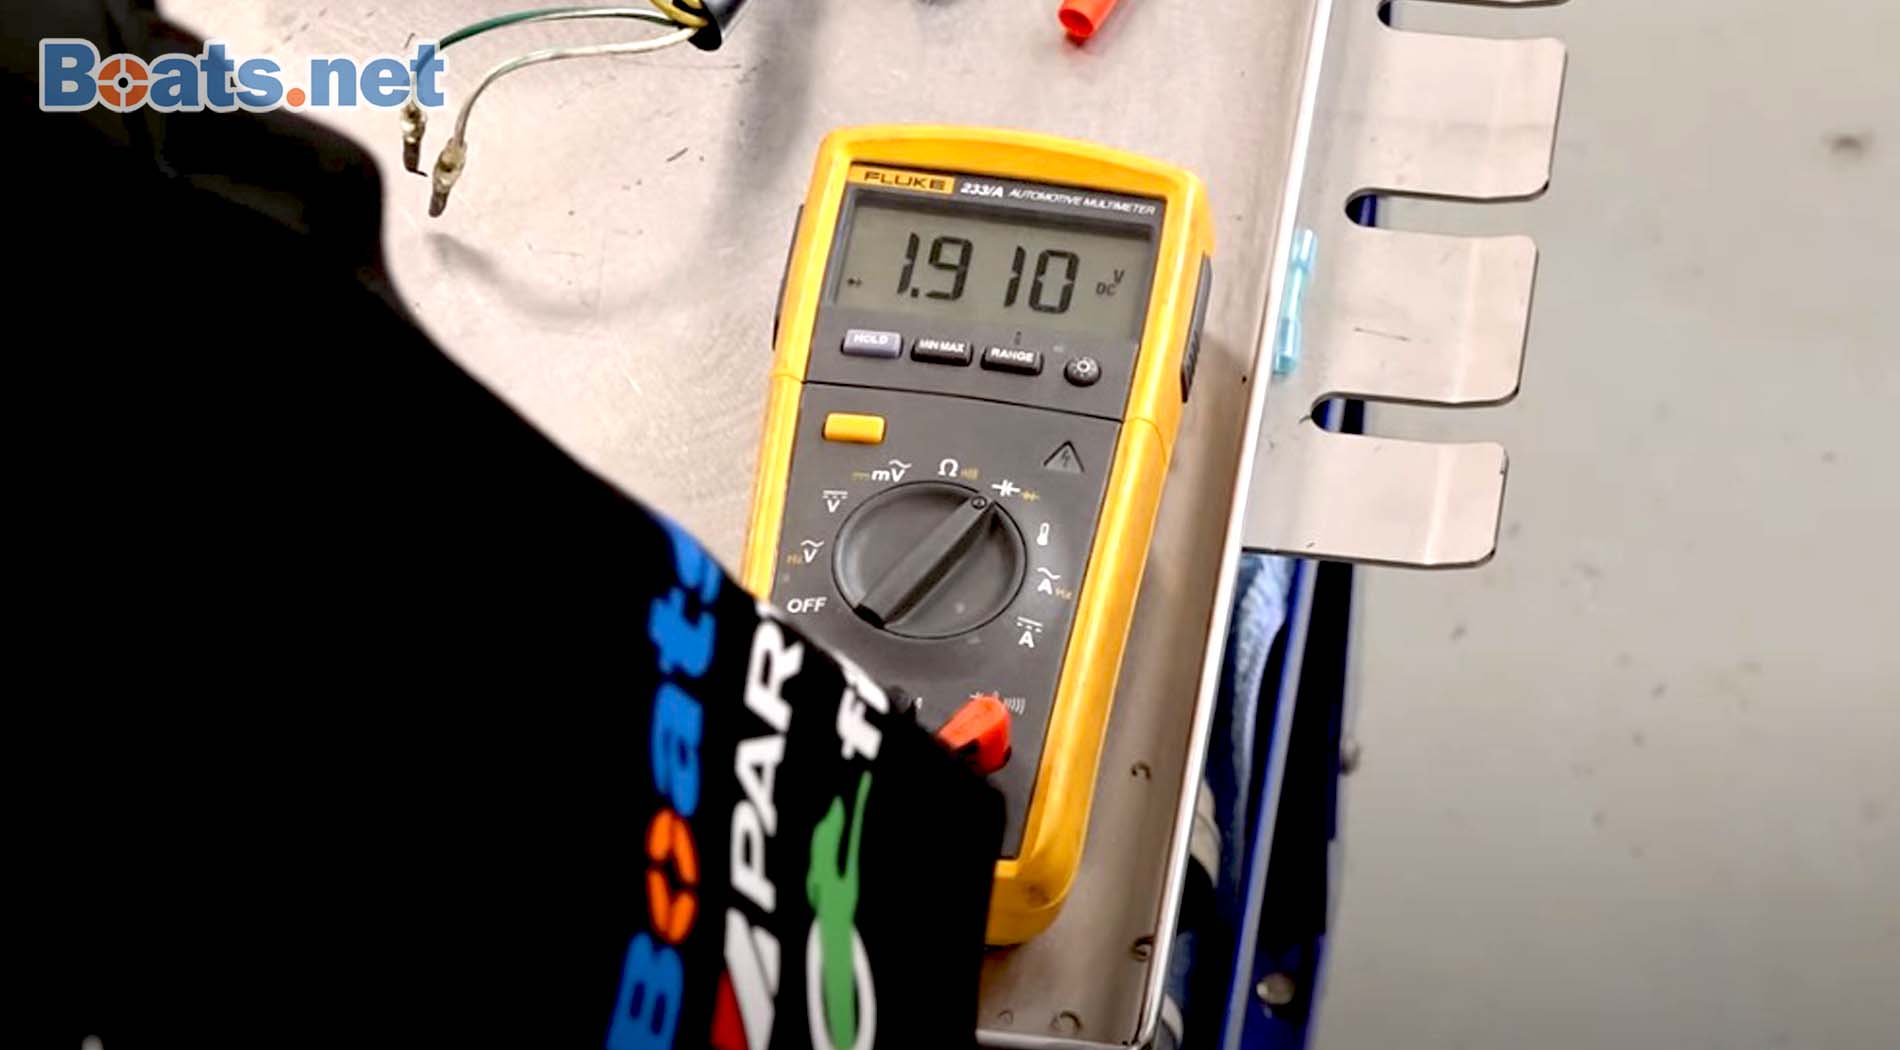 Mercury 40HP outboard voltage regulator test